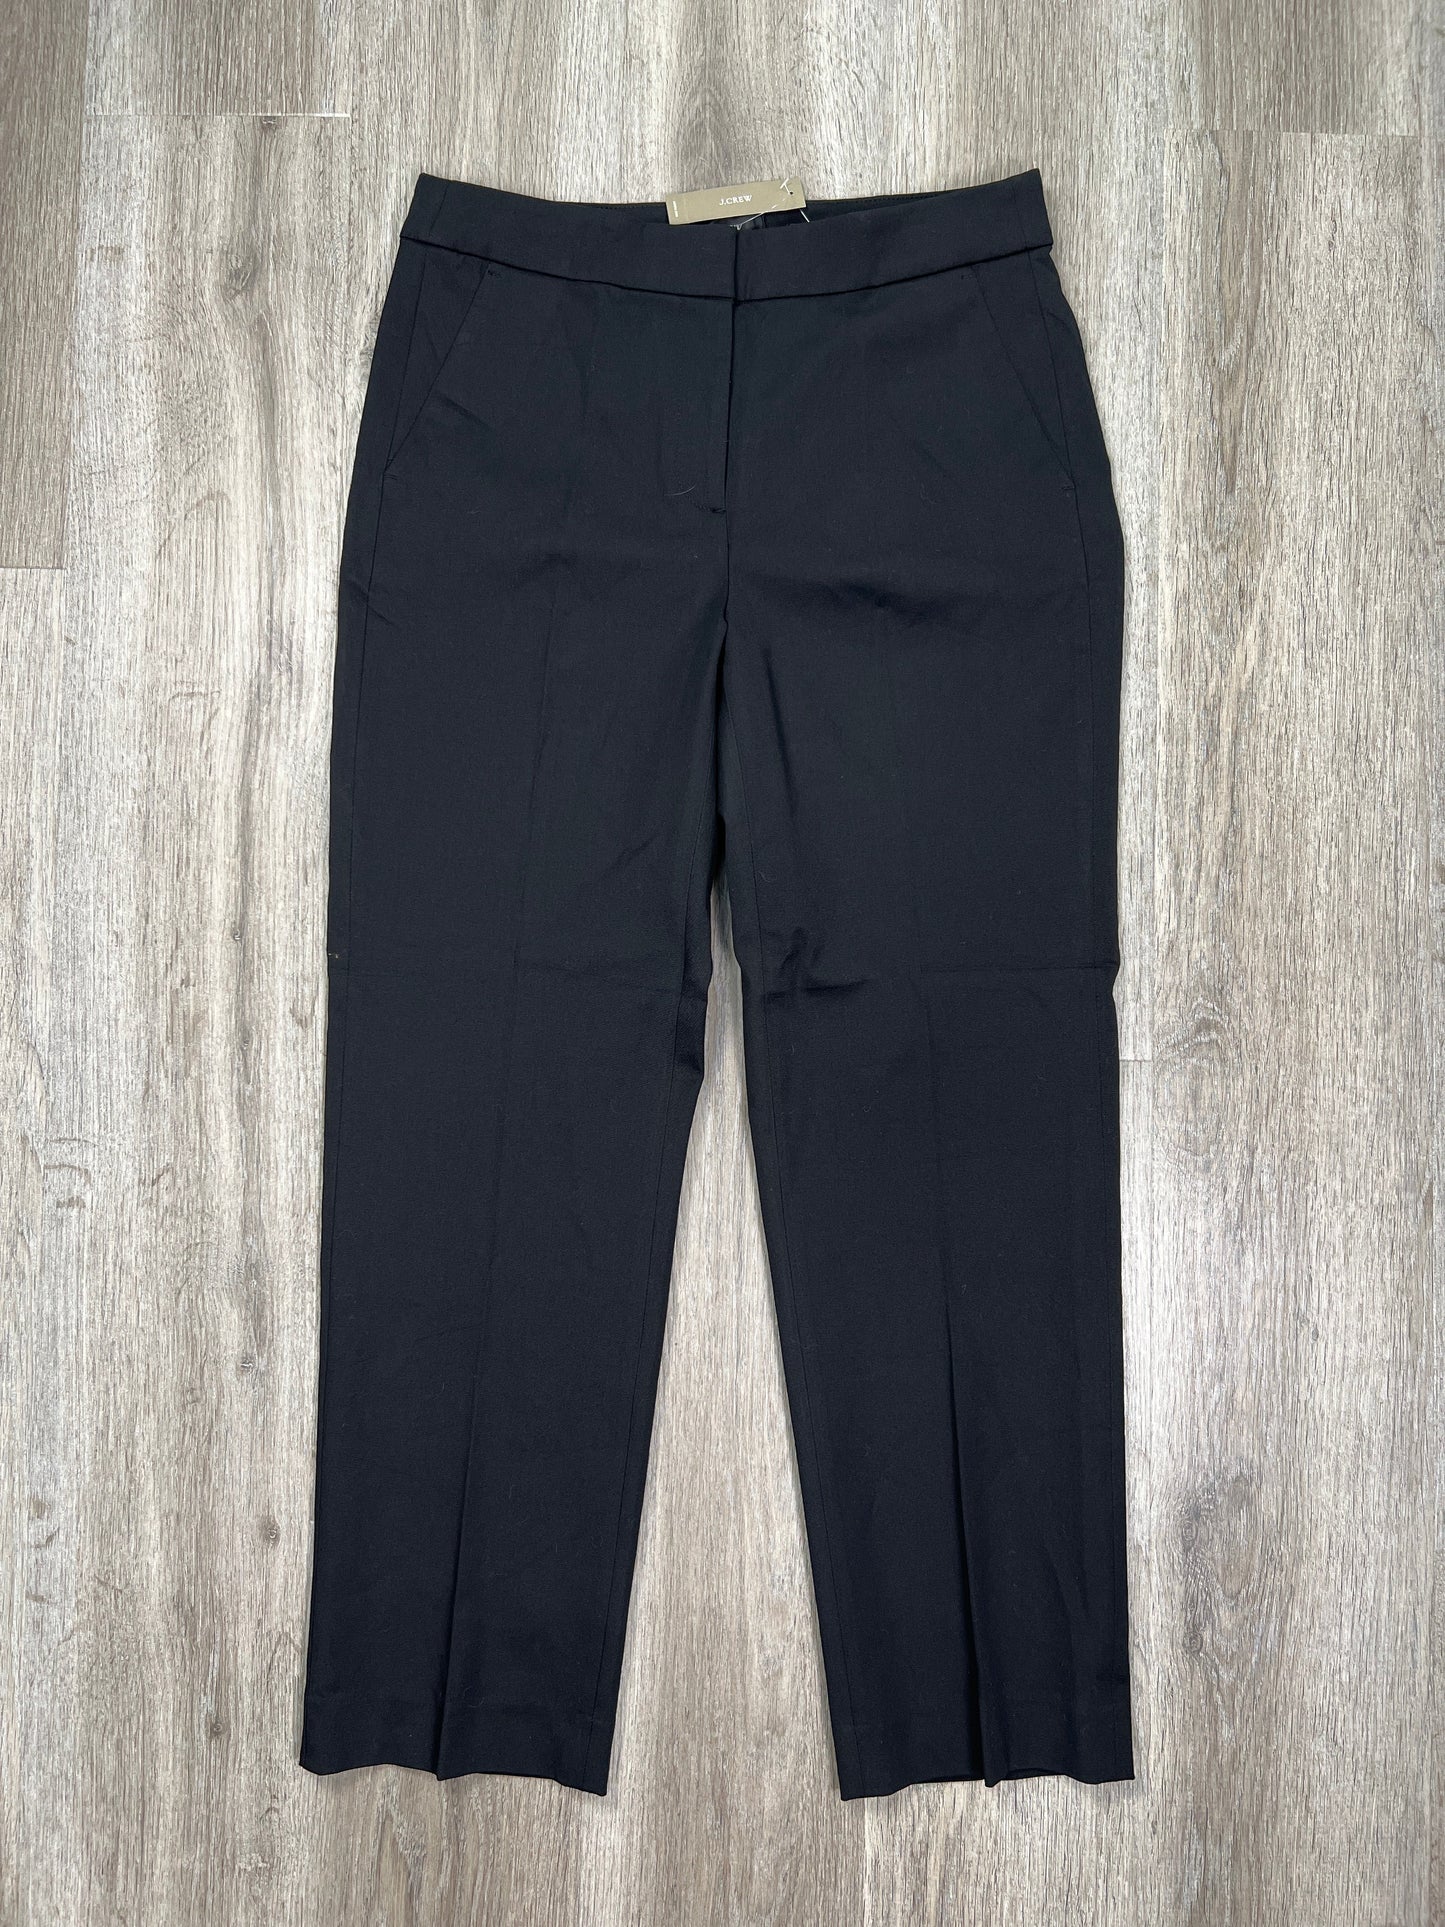 Black Pants Dress J. Crew, Size M